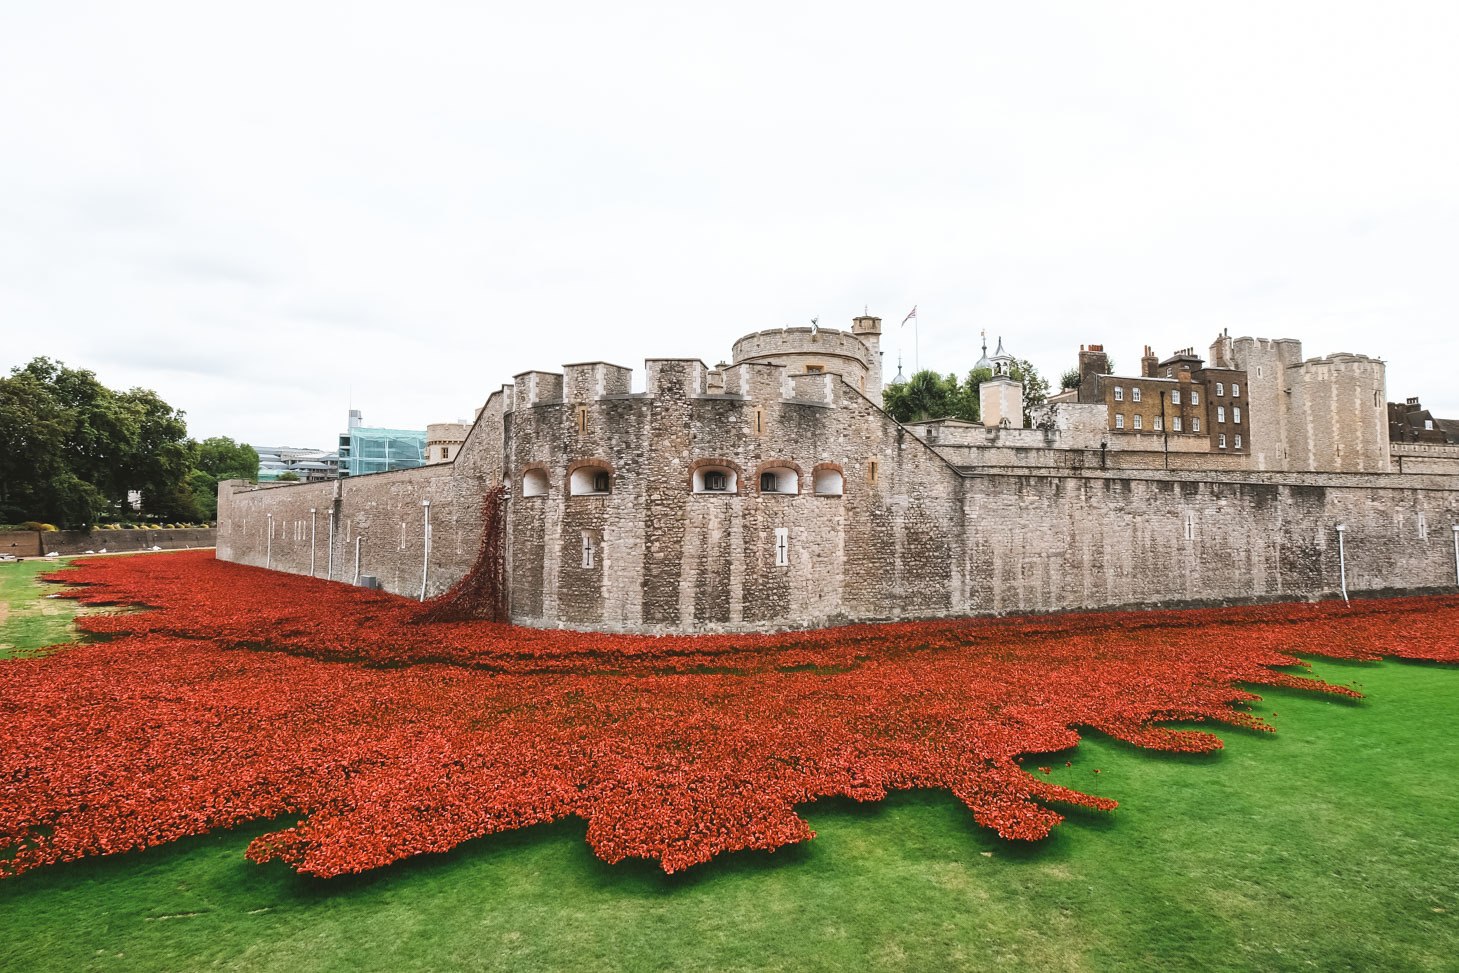 Tower of London med røde blomster